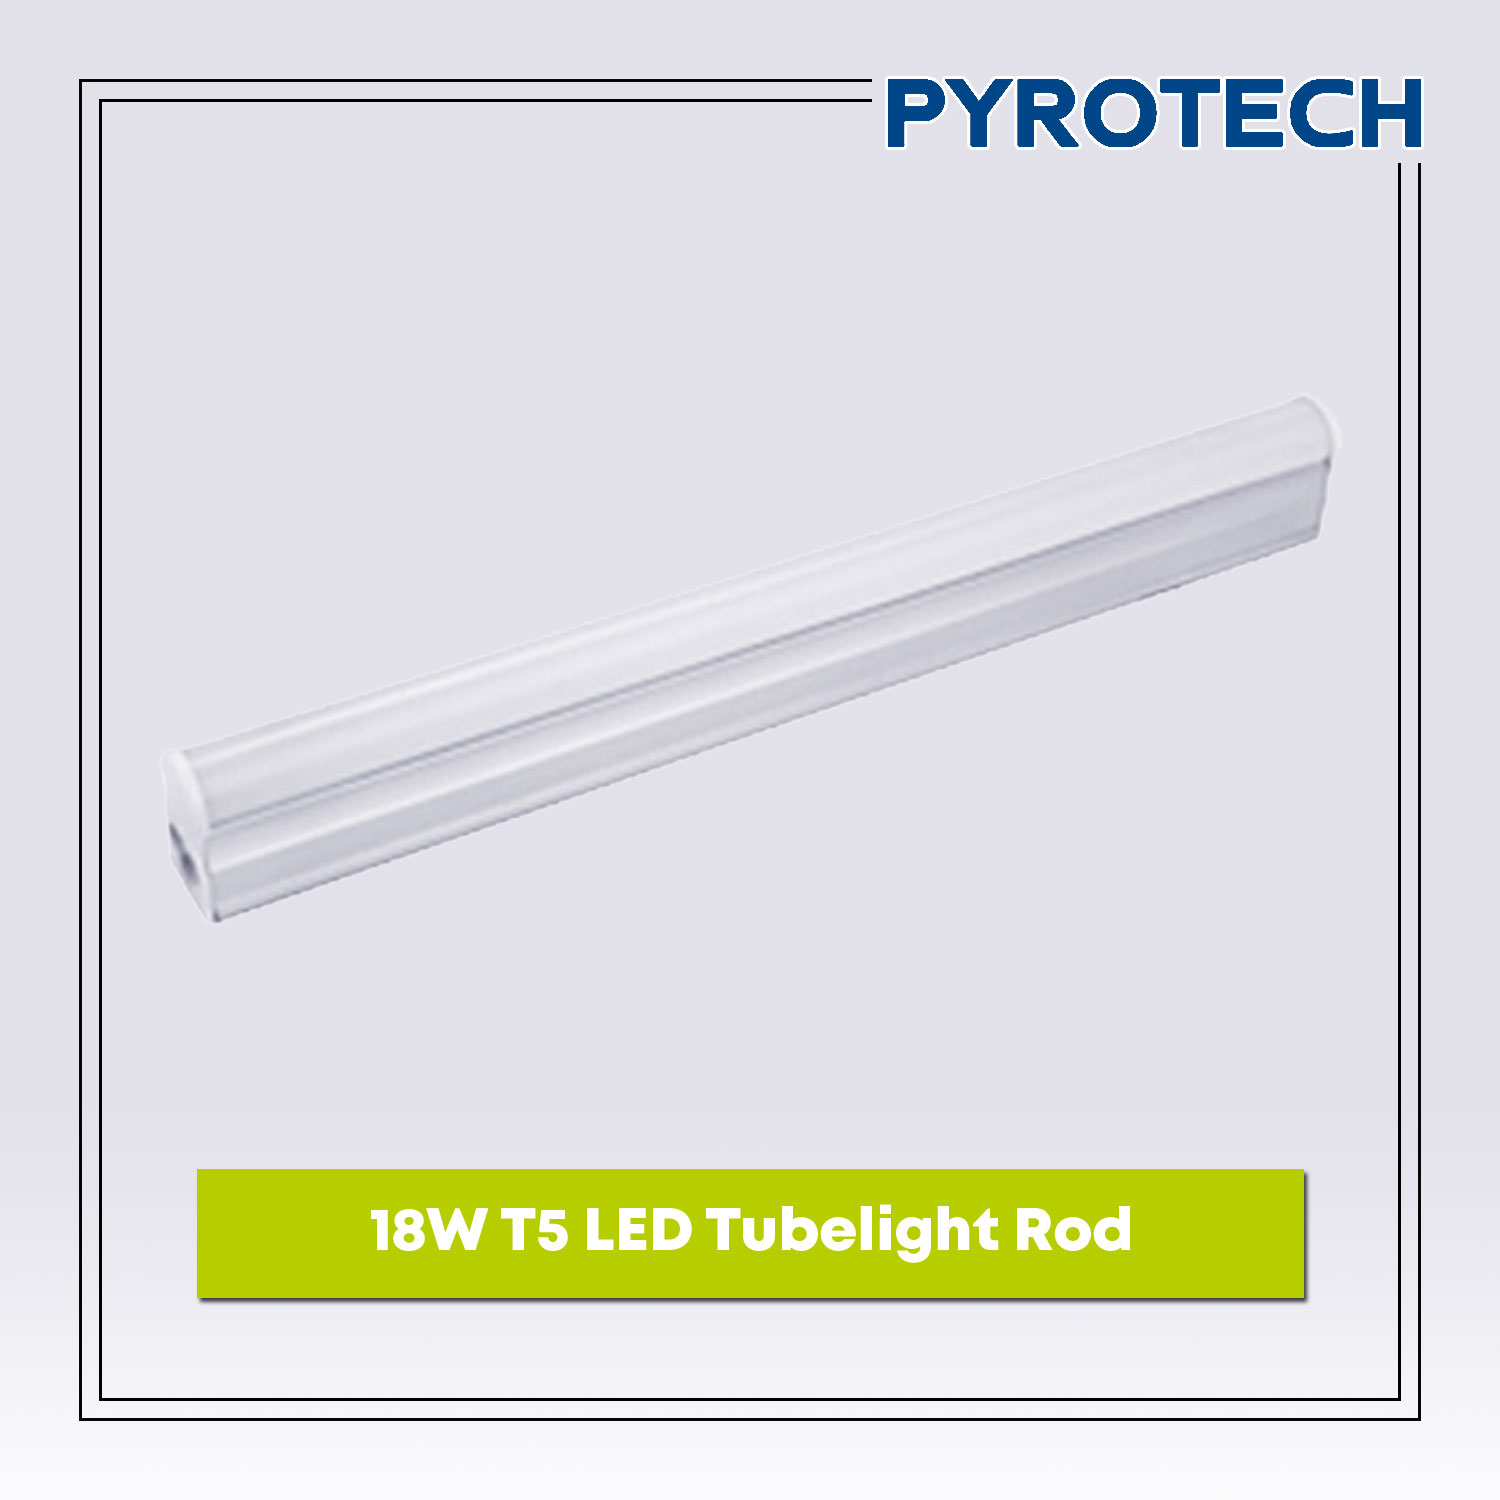 18 W T5 Led Tube Light Rod Manufacturer Exporter India